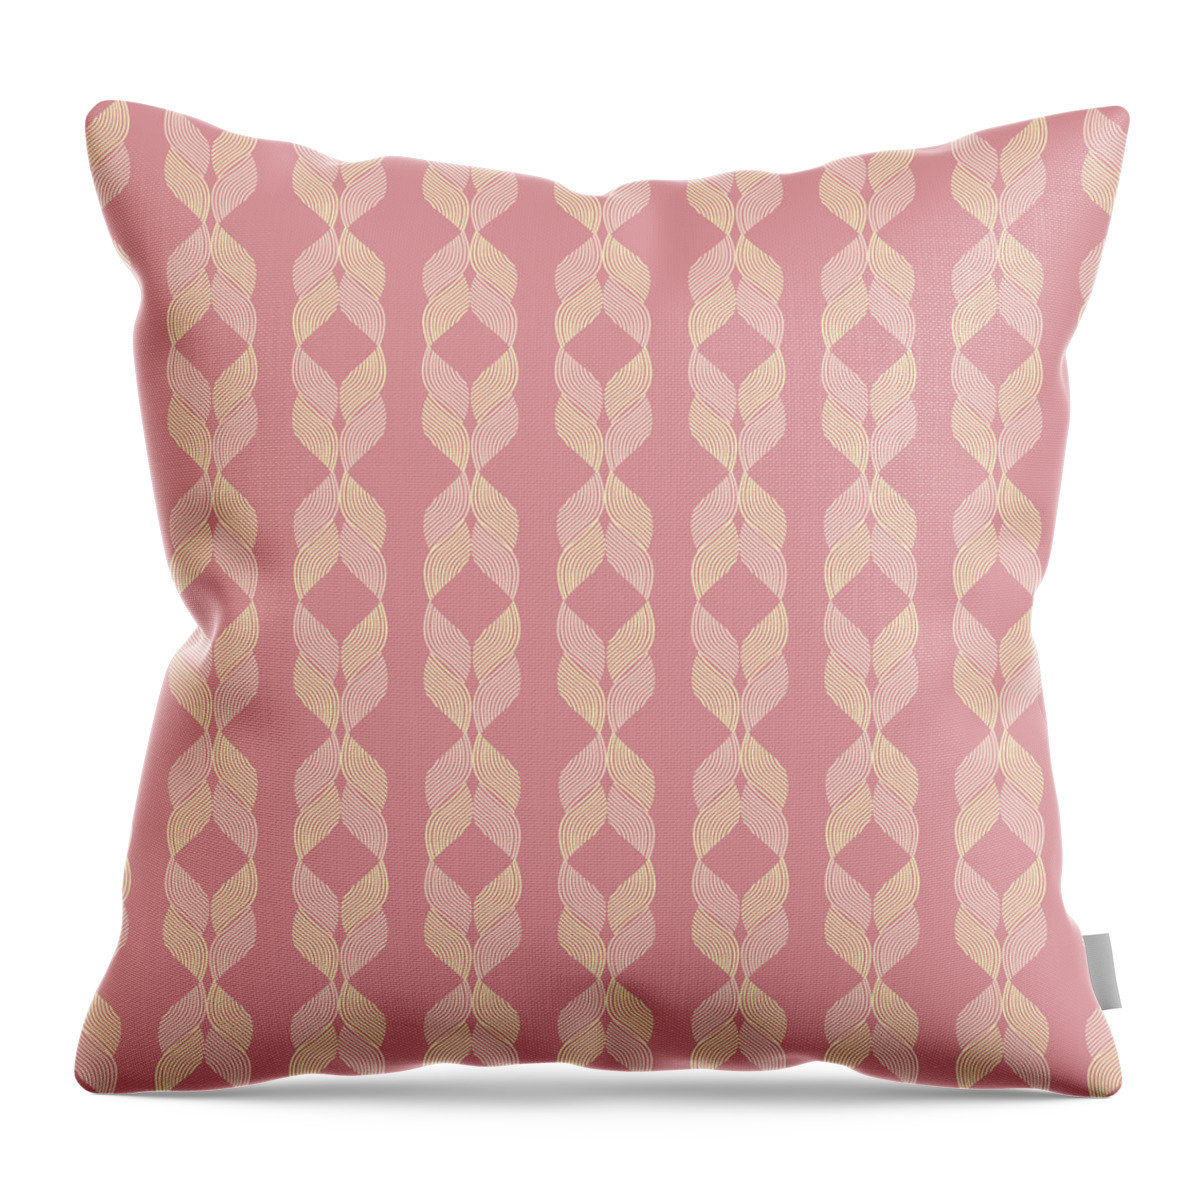 Pattern Throw Pillow featuring the digital art Vintage Geometric Leaf Pattern - Berry Pink by Studio Grafiikka